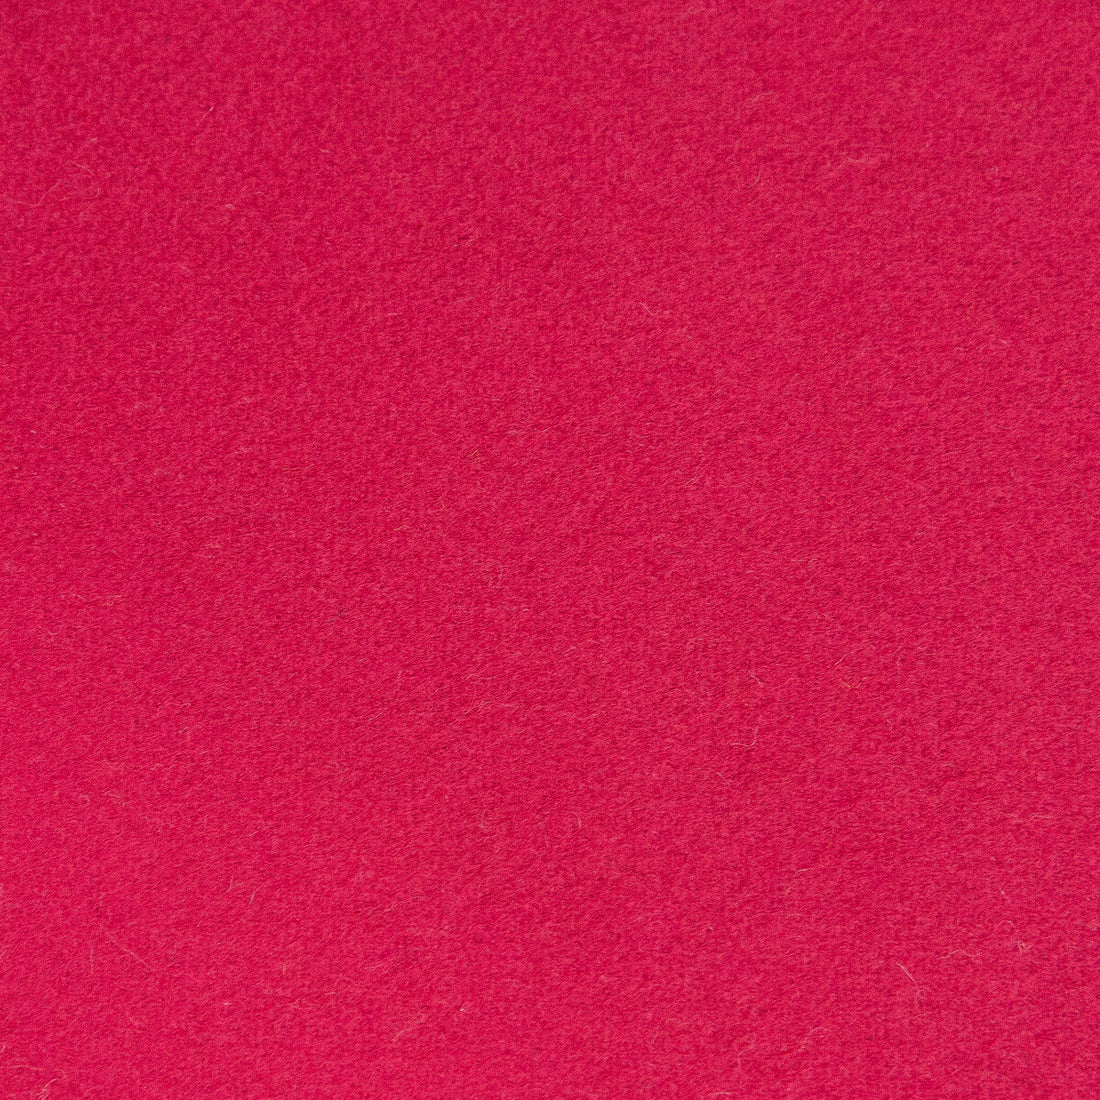 Denver fabric in rojo color - pattern GDT5582.010.0 - by Gaston y Daniela in the Gaston Luis Bustamante collection